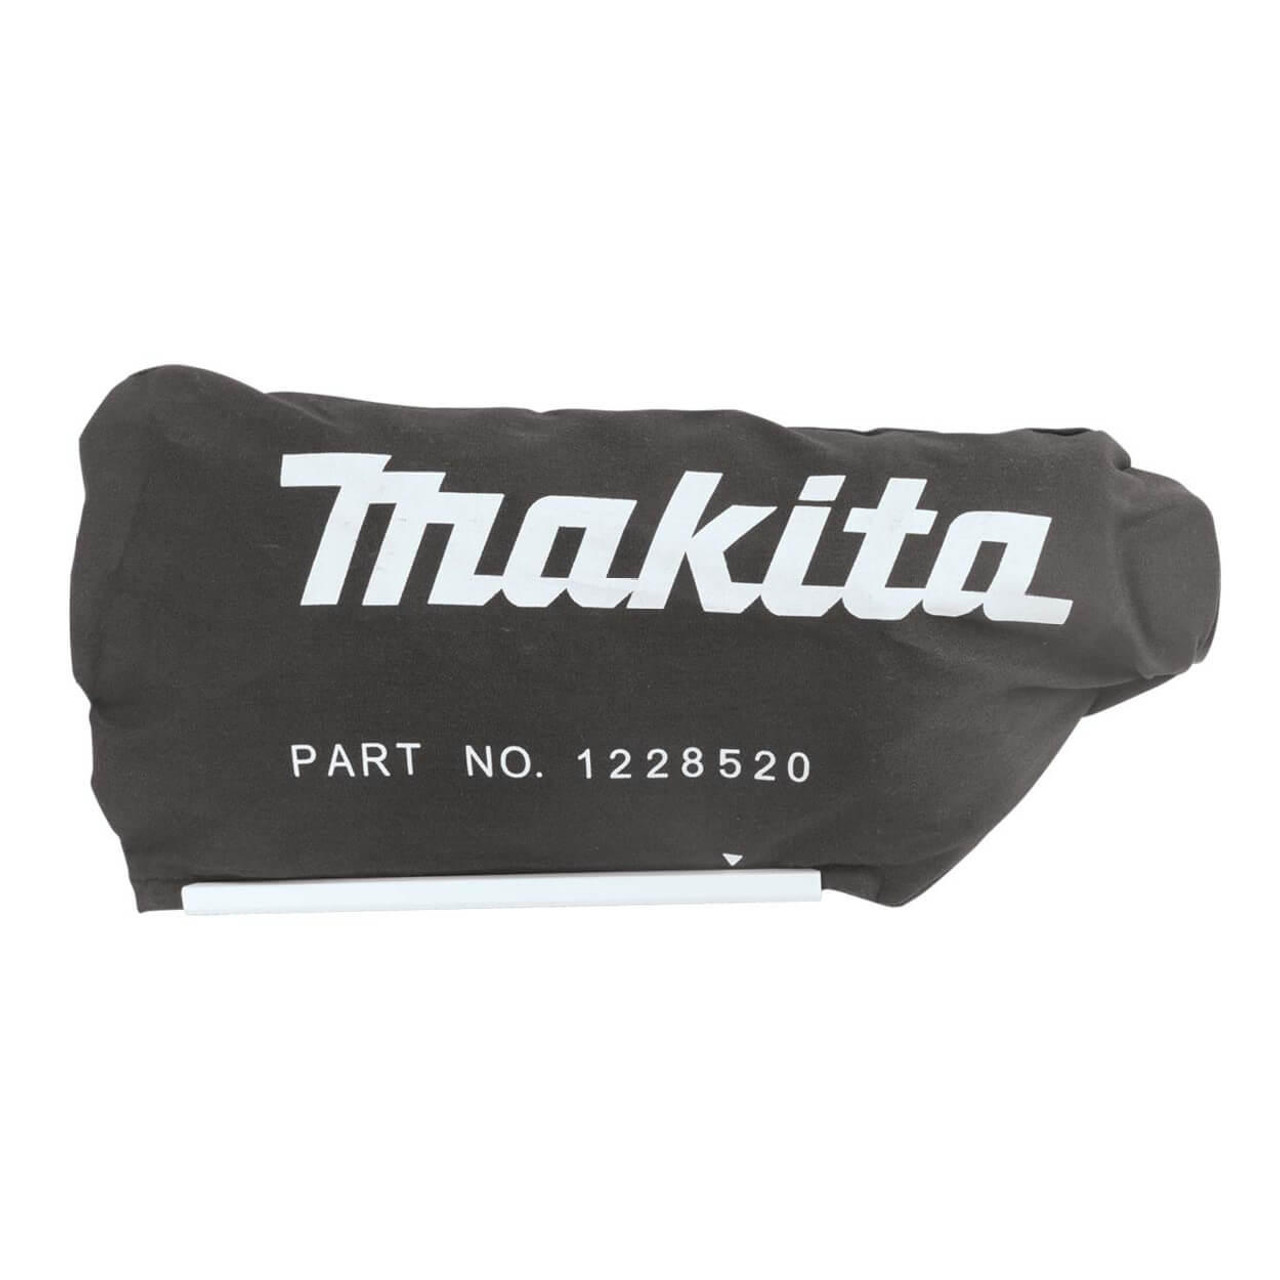  Makita 18Vx2 Mobile Brushless 190mm (7-1/2") Slide Compound Saw DLS714Z 